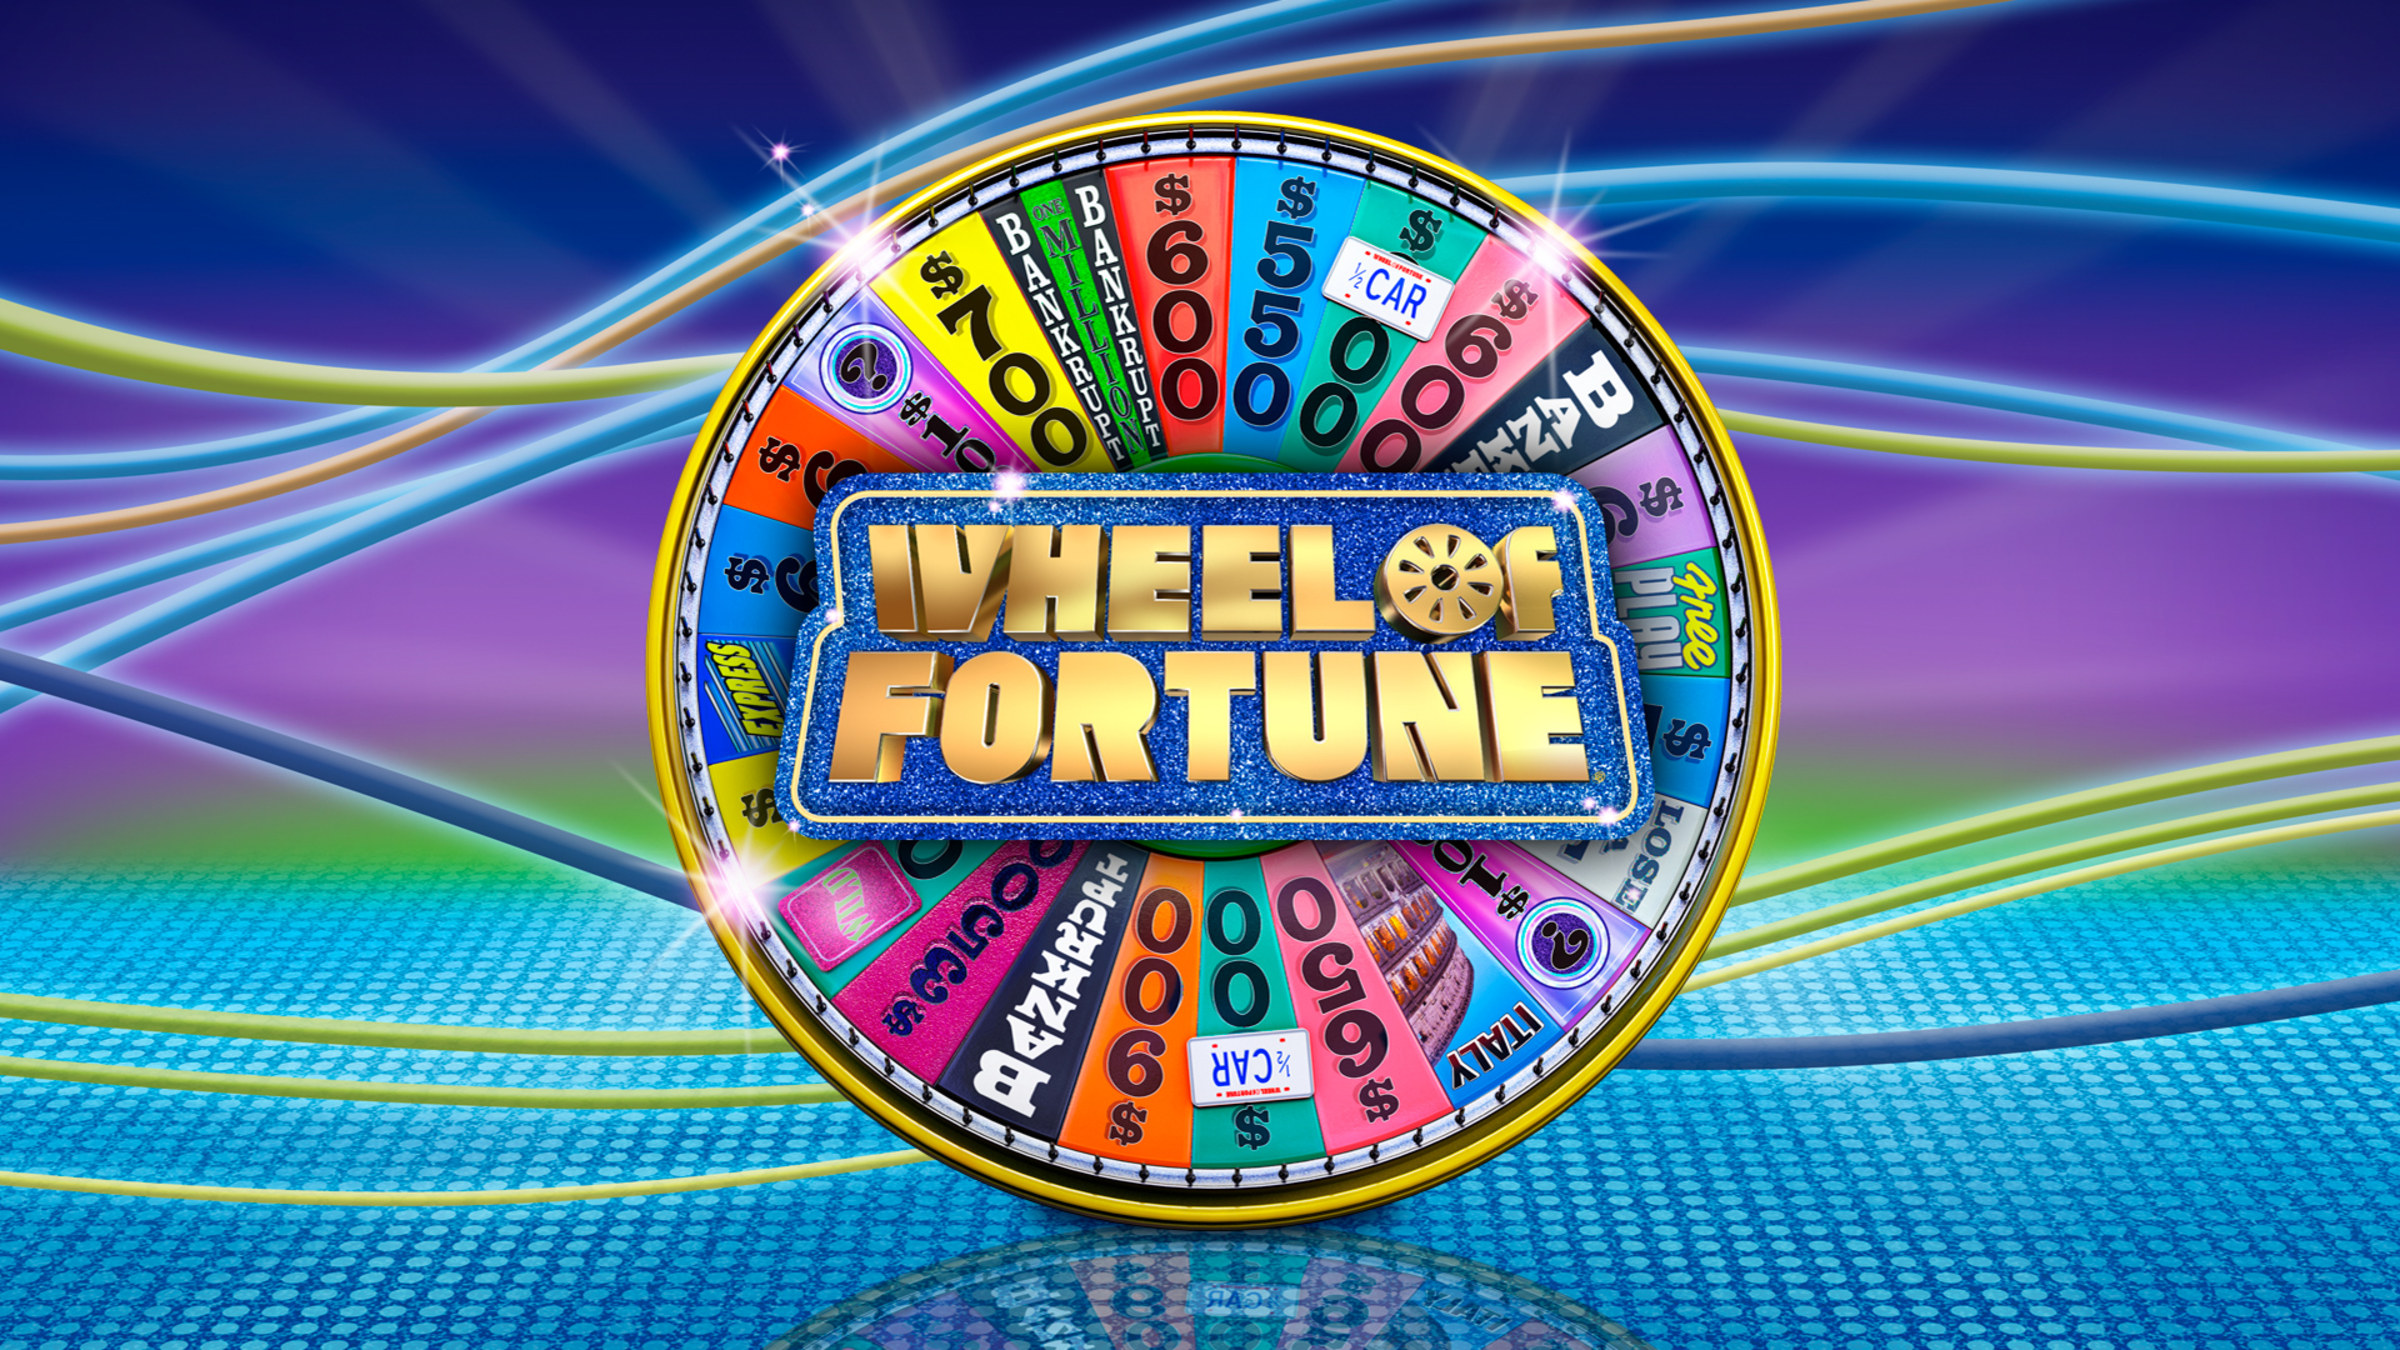 Casino wheel of fortune. Wheel of Fortune игра. Колесо фортуны шоу. Колесо фортуны ТВ шоу. Колесо фортуны казино.